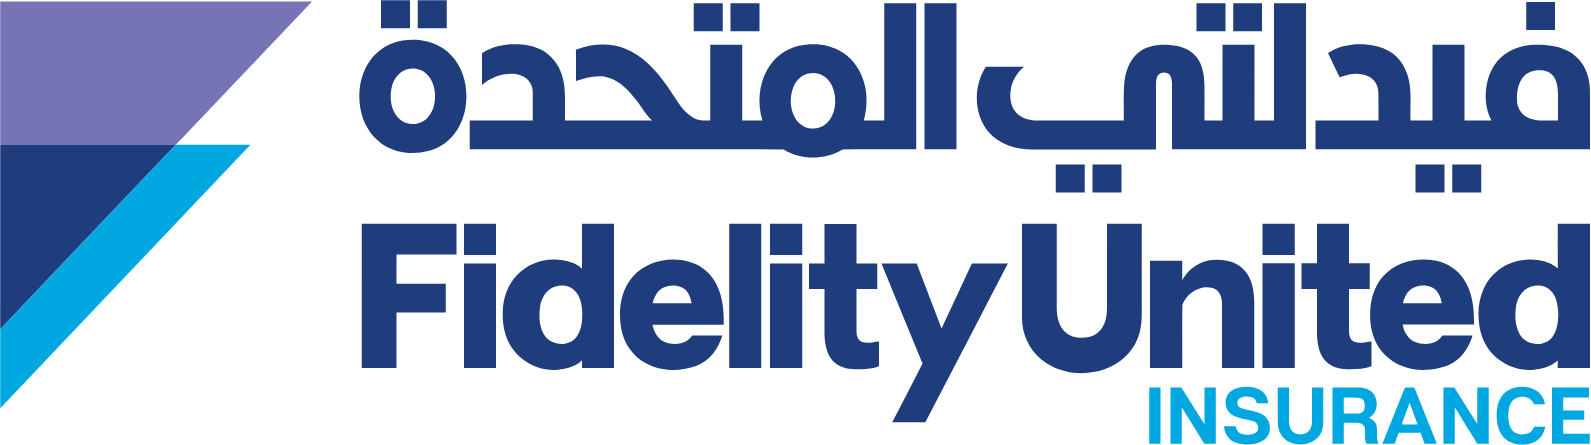 United Fidelity Insurance Company logo large (transparent PNG)